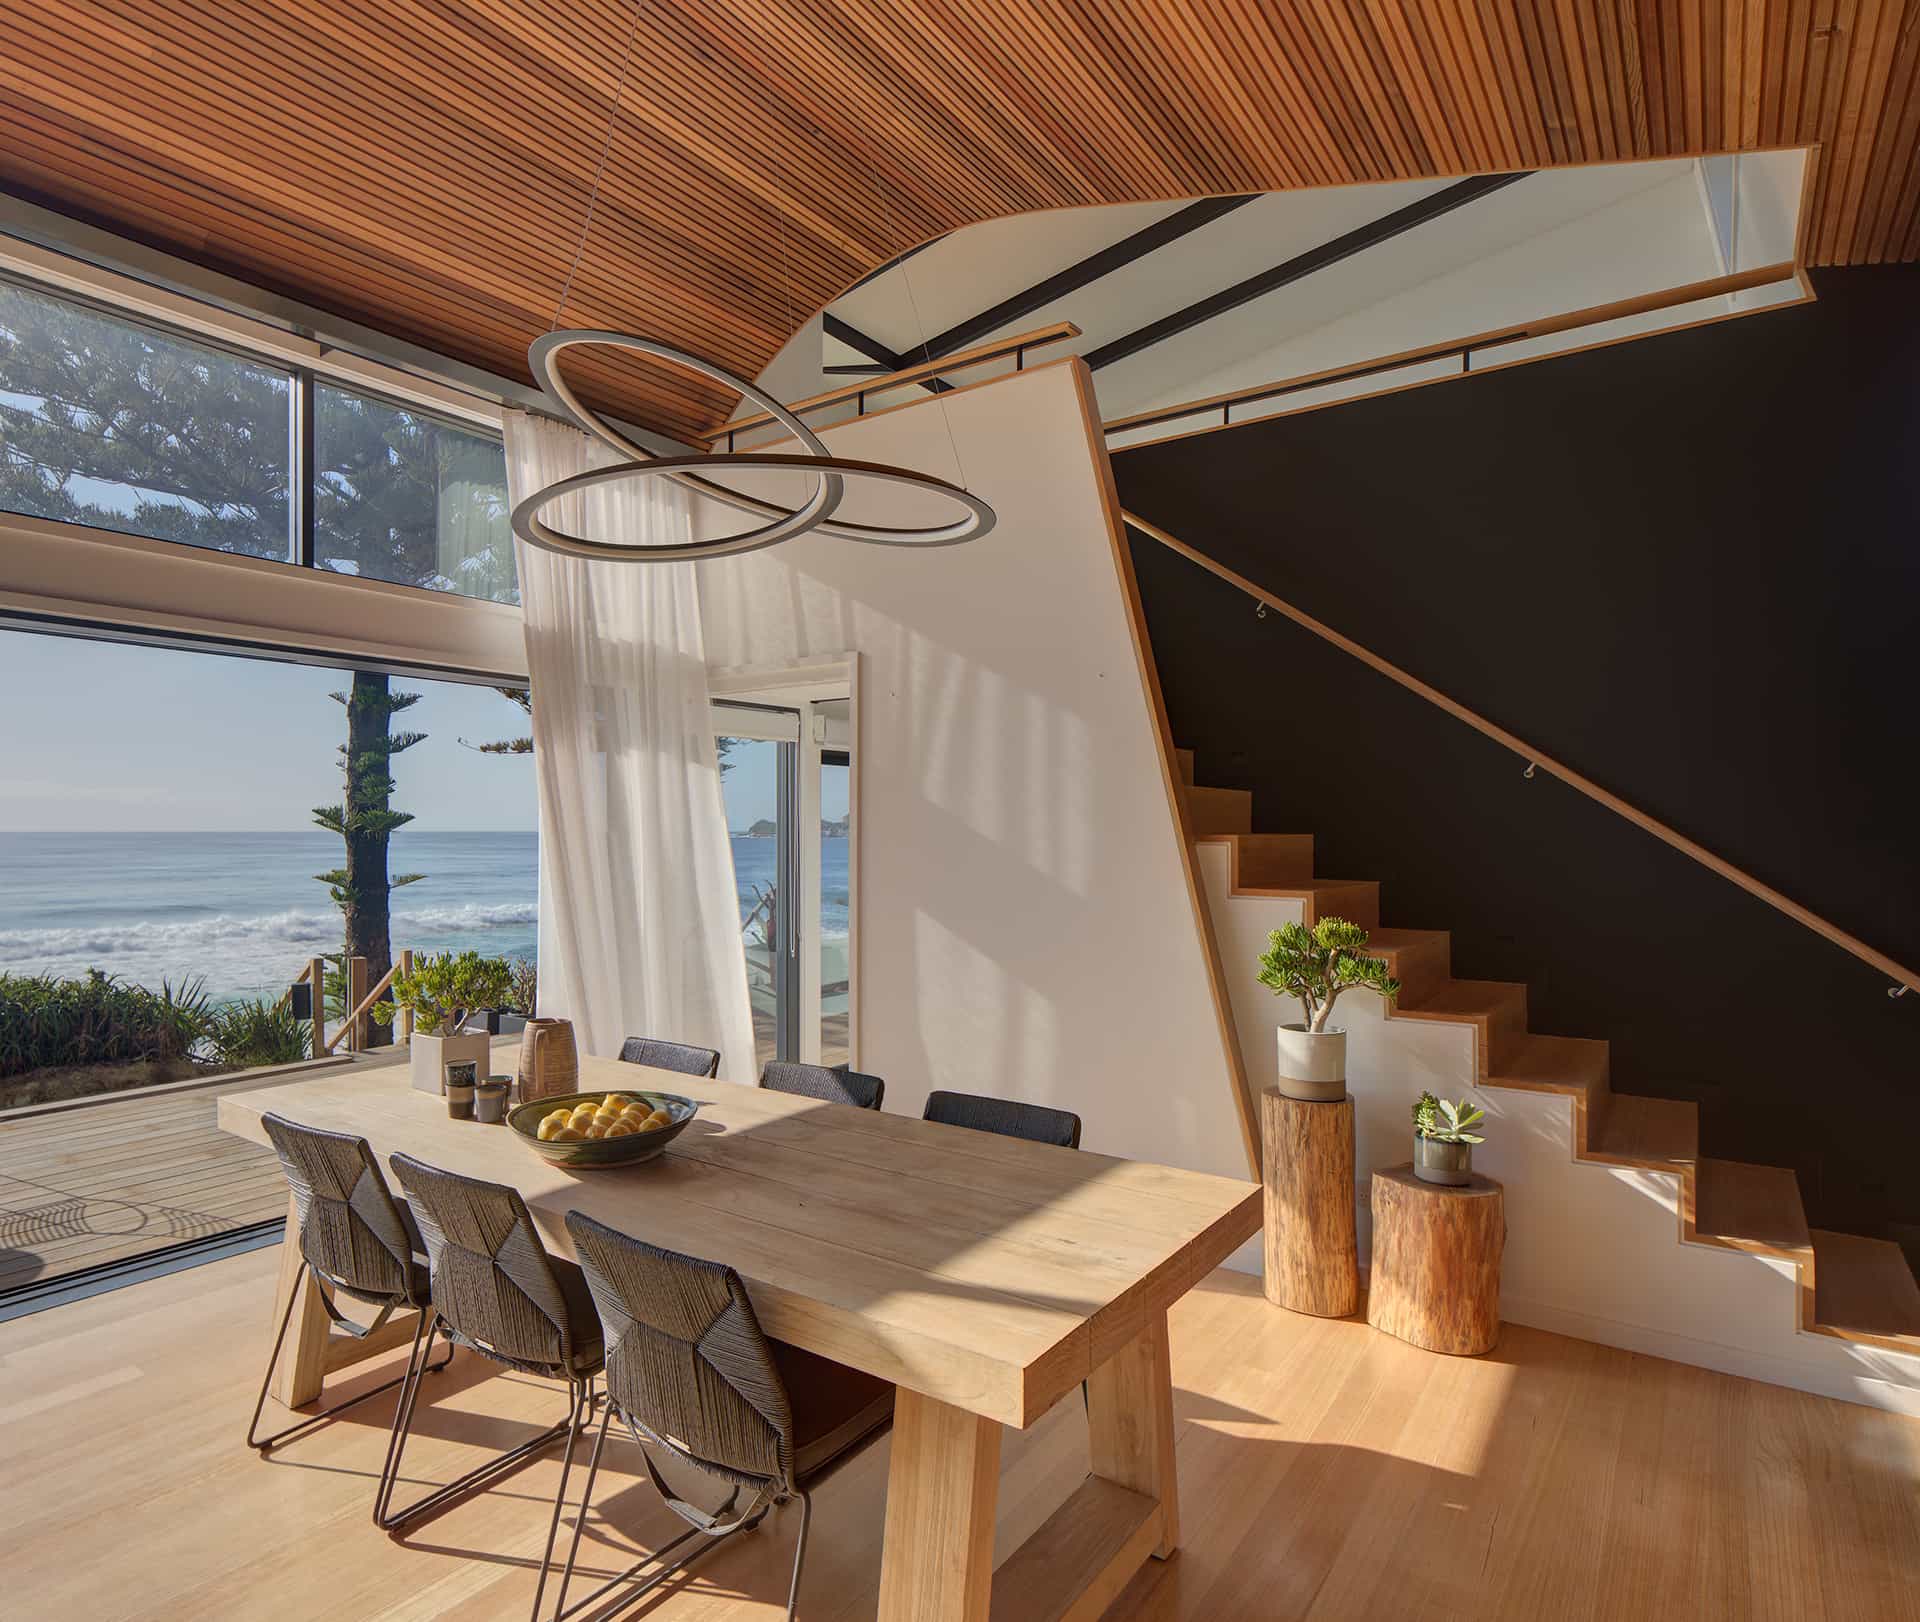 Beach House Interior Design